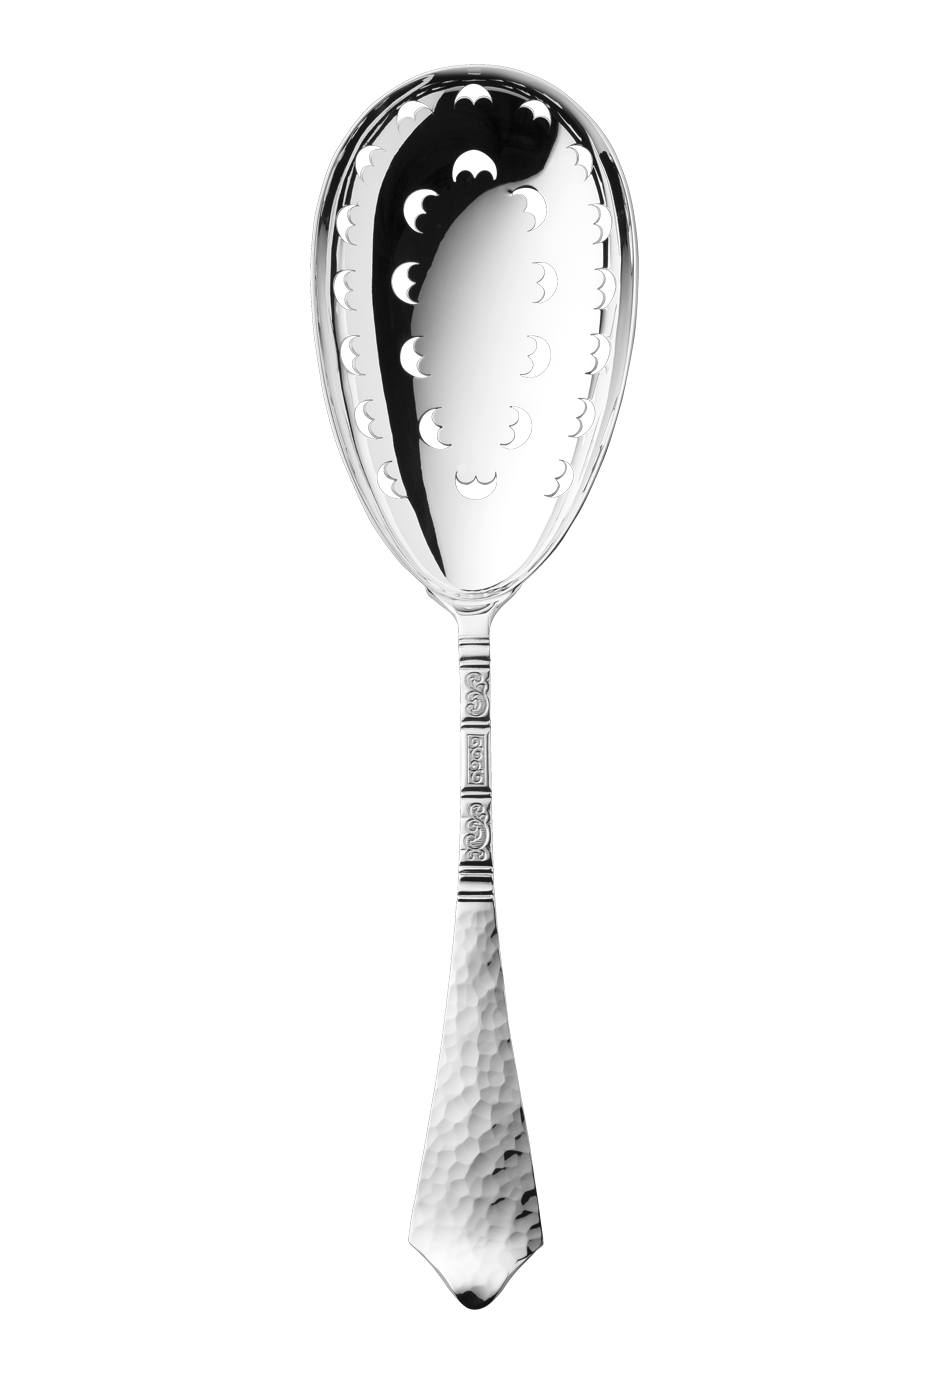 Hermitage Pierced spoon (150g massive silverplated)